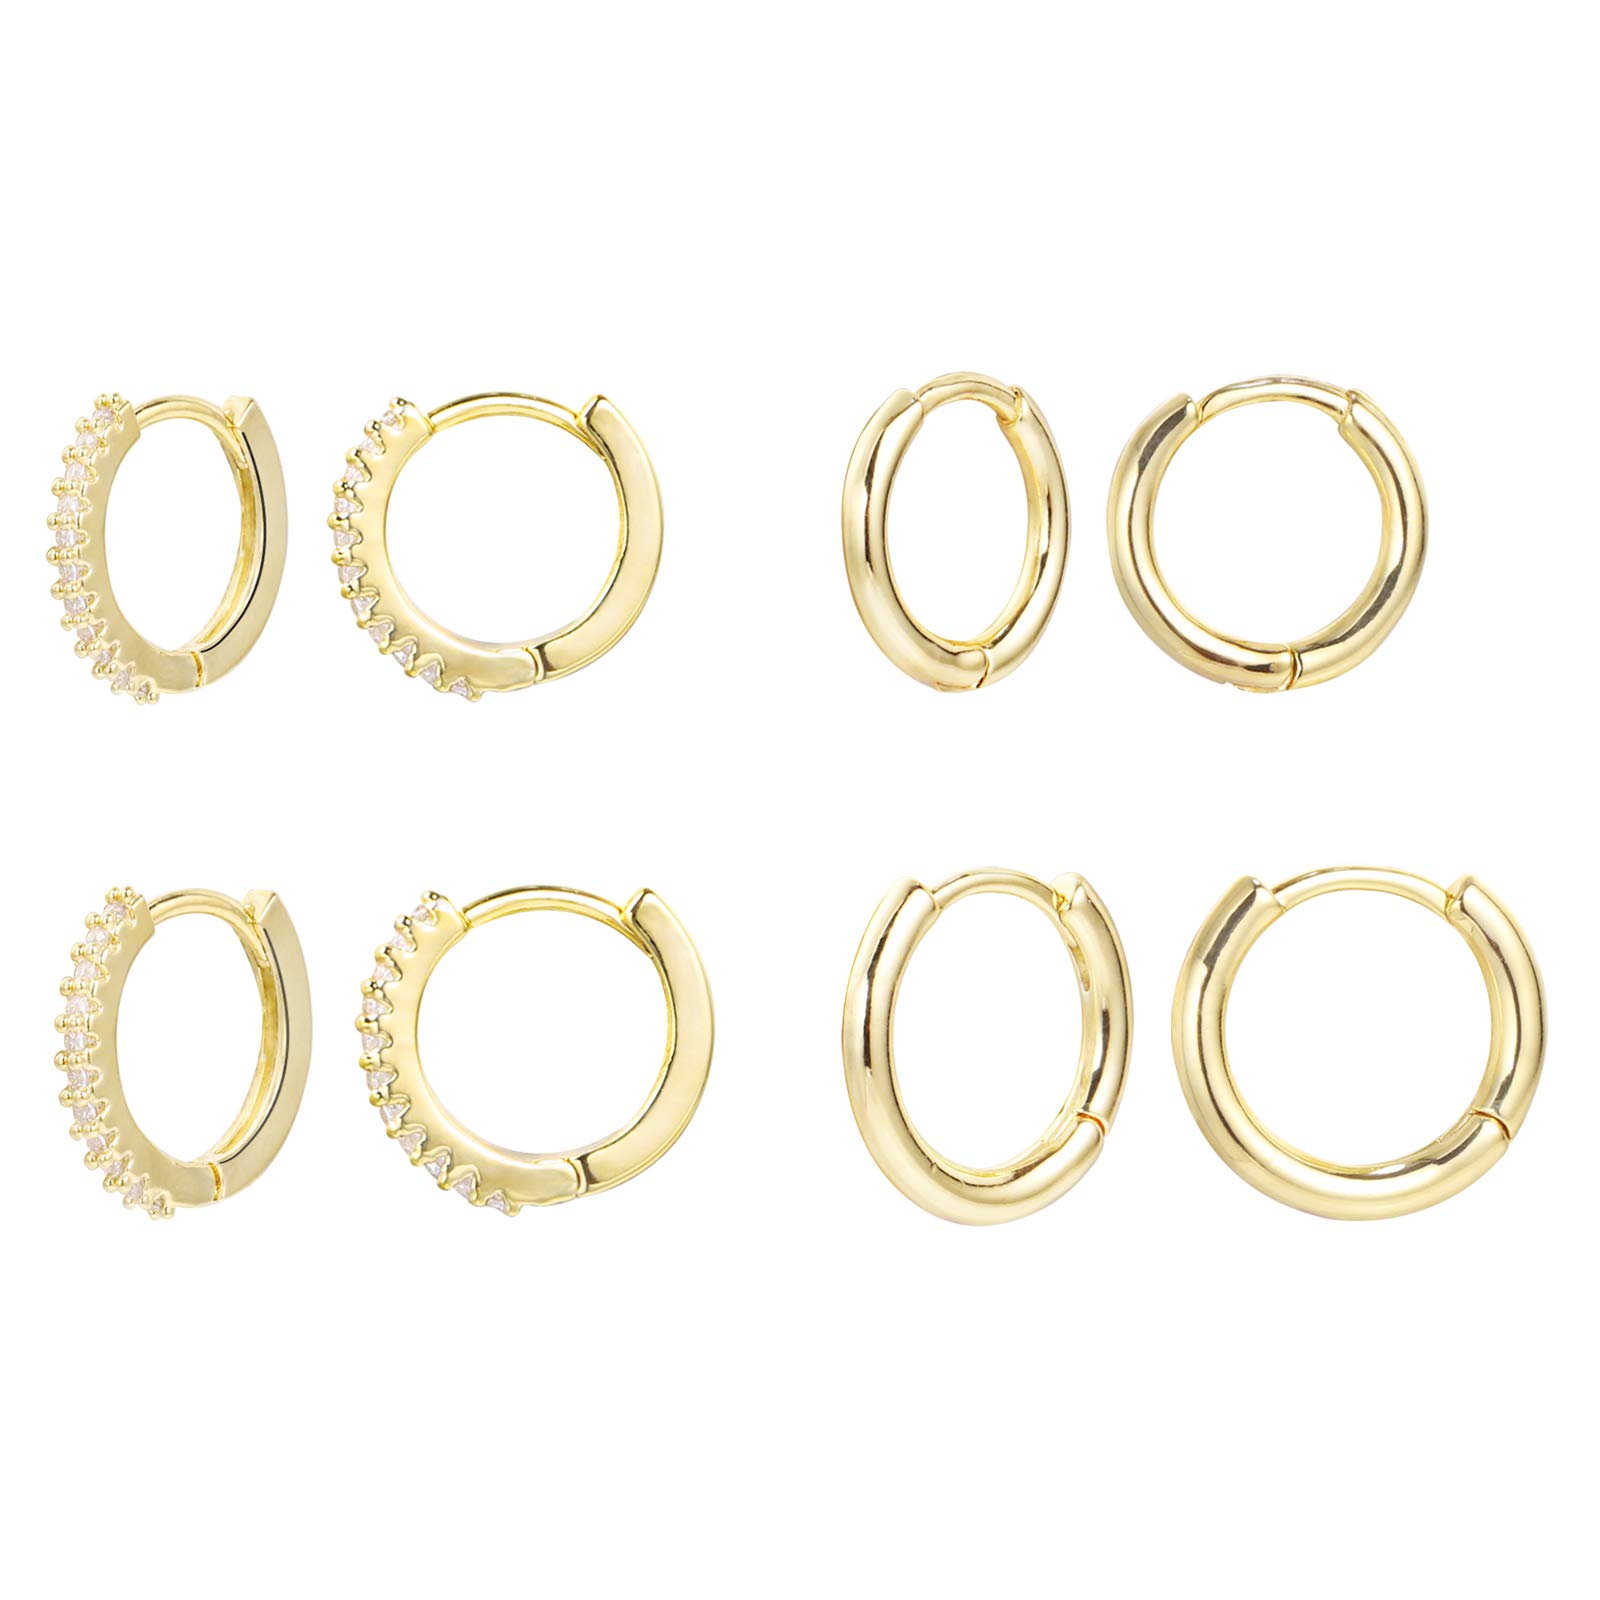 ALEXCRAFT Small Gold Huggie Hoop Earrings 4 Pairs CZ Paved Diamond 14K Gold Plated Huggie Earrings Set for Women Girls